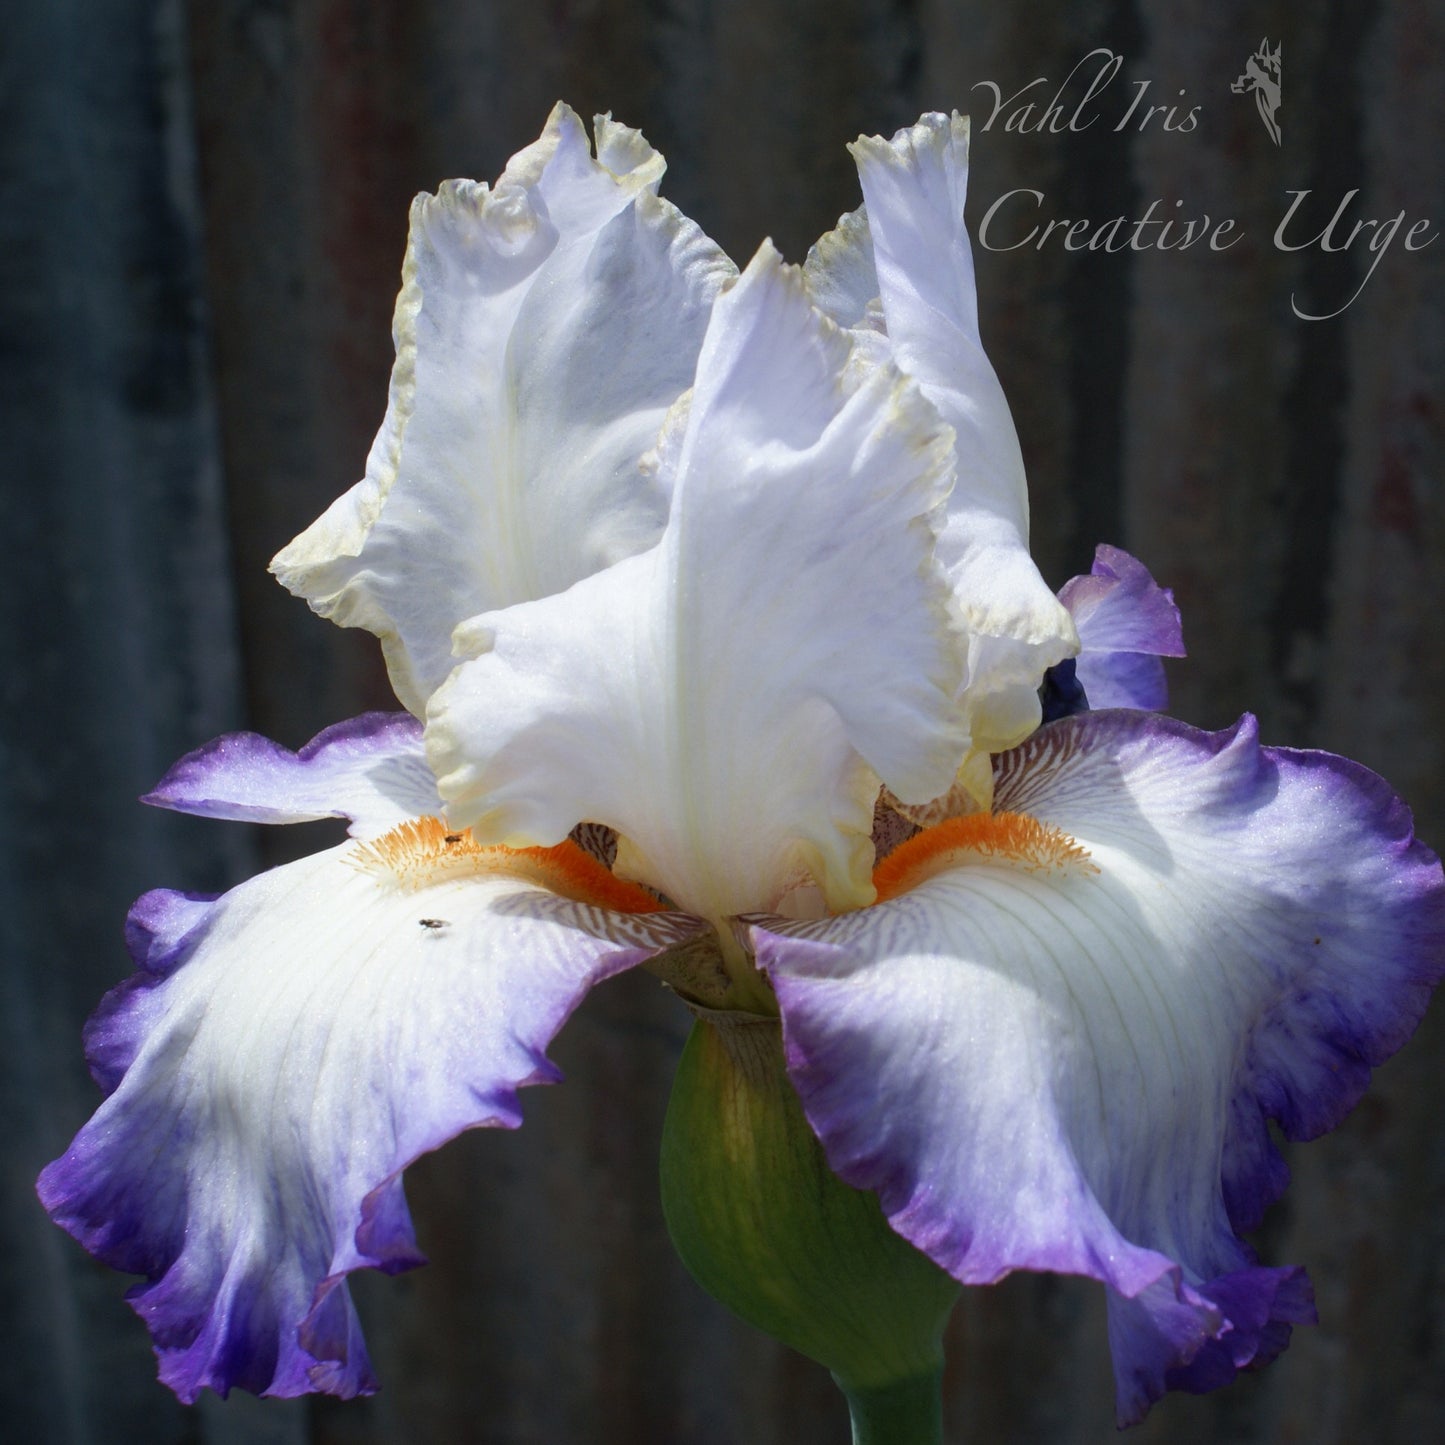 Creative Urge - Tall bearded iris